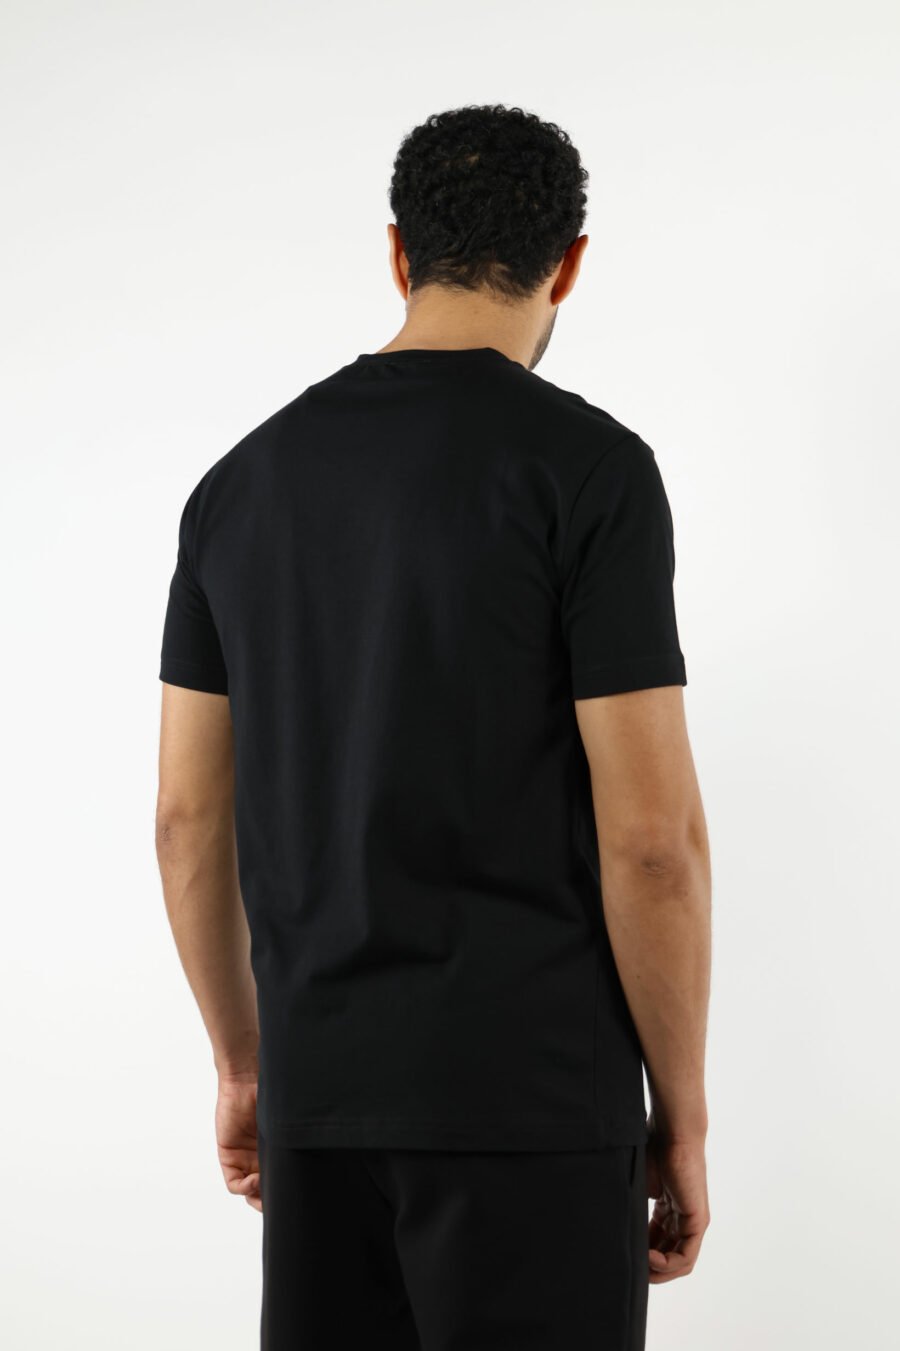 T-shirt preta com maxilogo "lux identity" azul - 110871